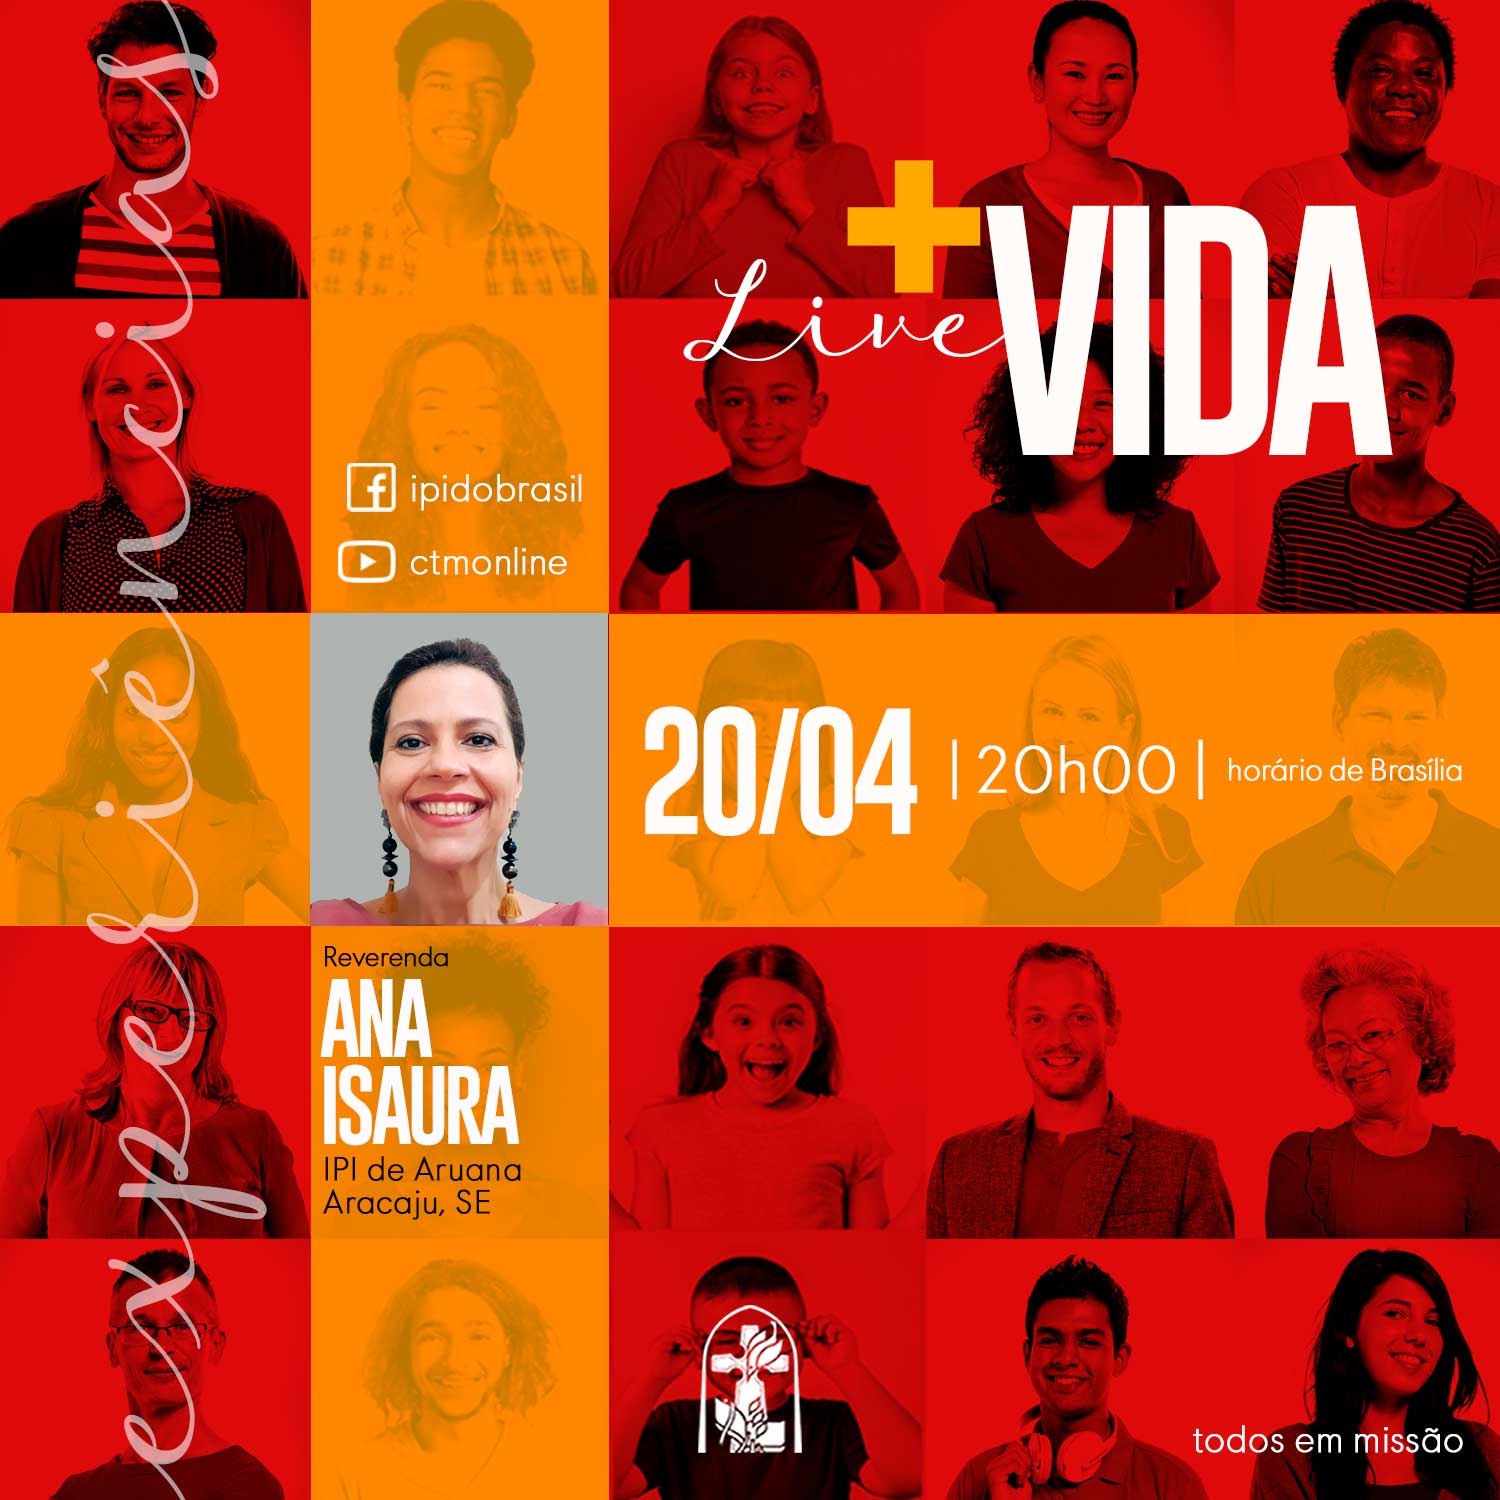 Live + Vida: Revª Ana Isaura